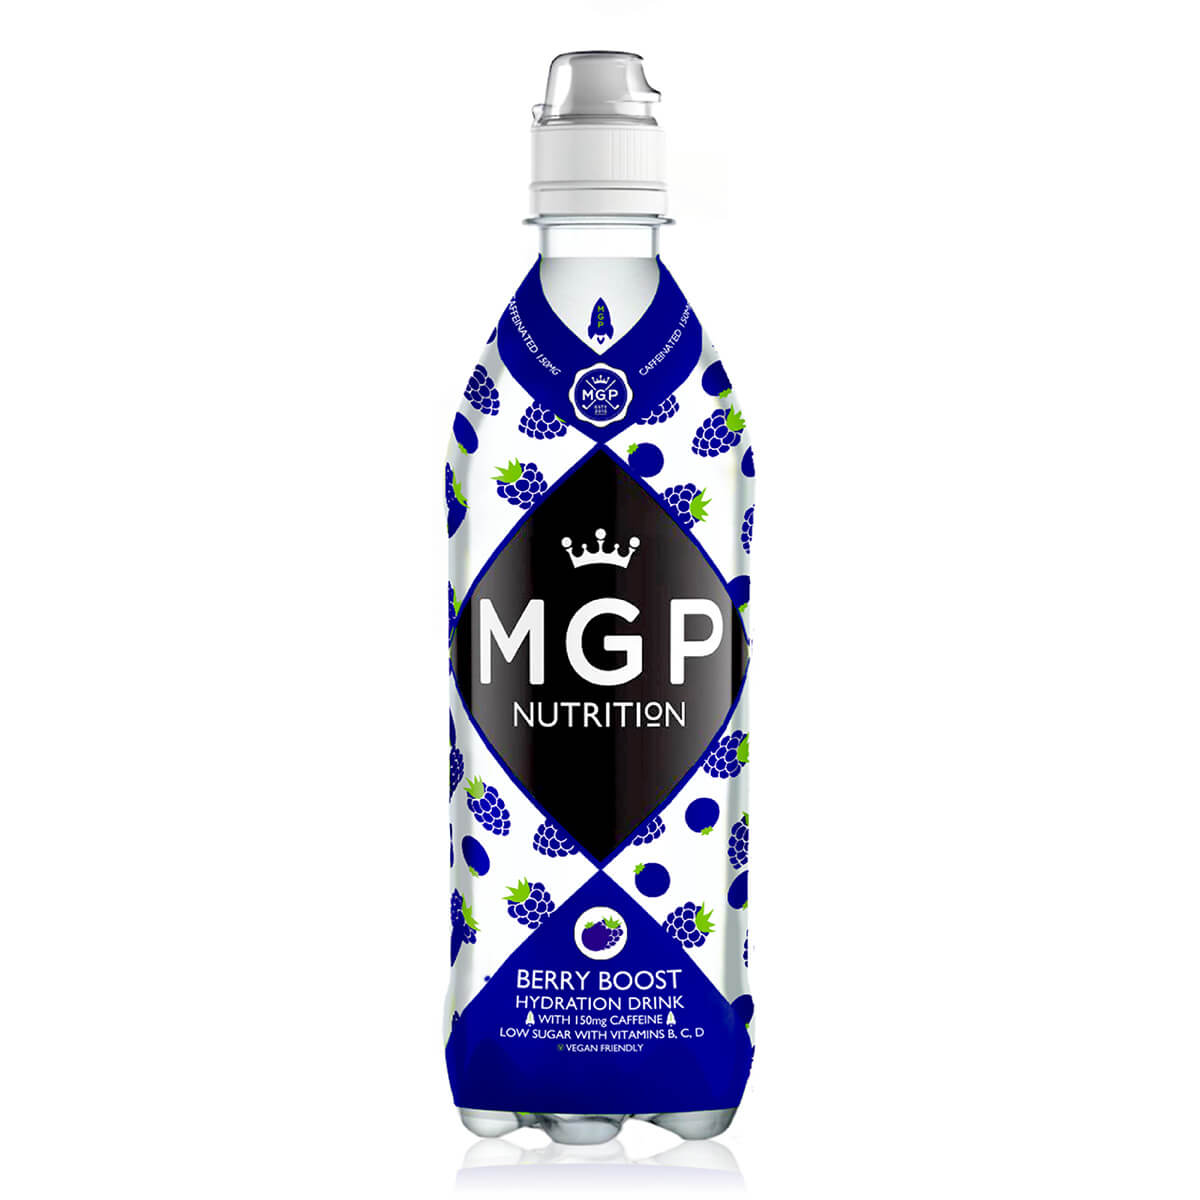 MGP Nutrition